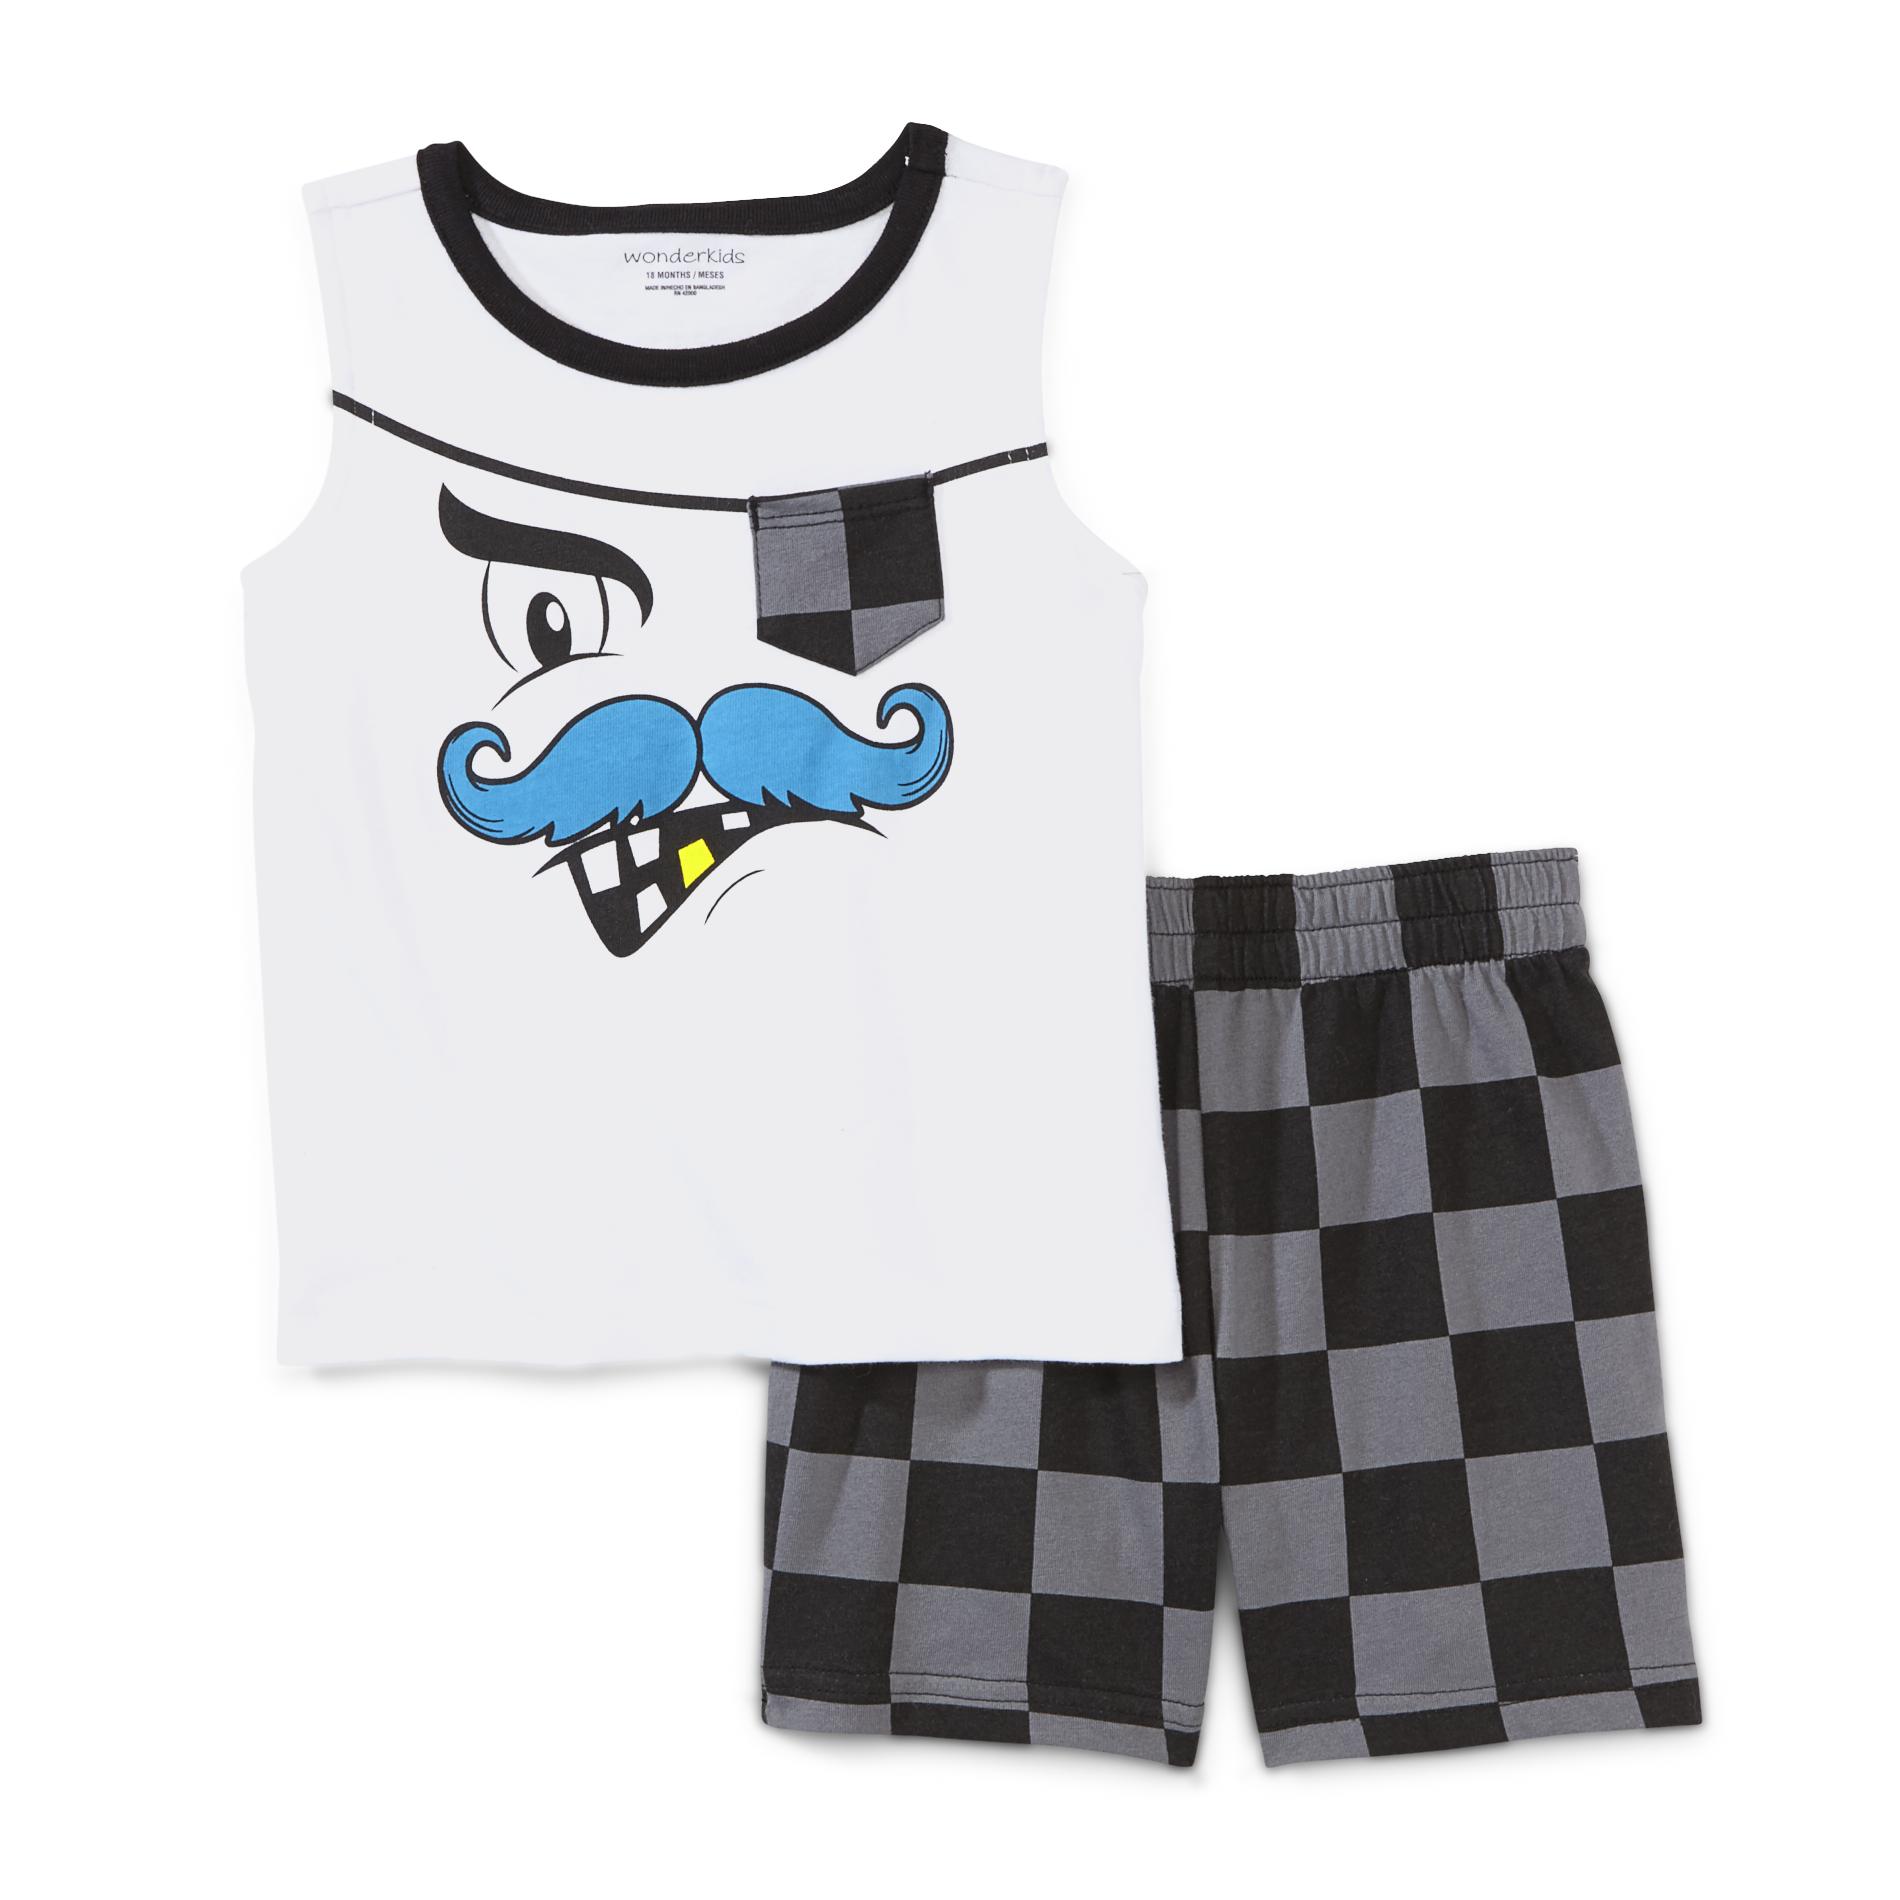 WonderKids Infant & Toddler Boy's Sleeveless Shirt & Shorts - Pirate Face